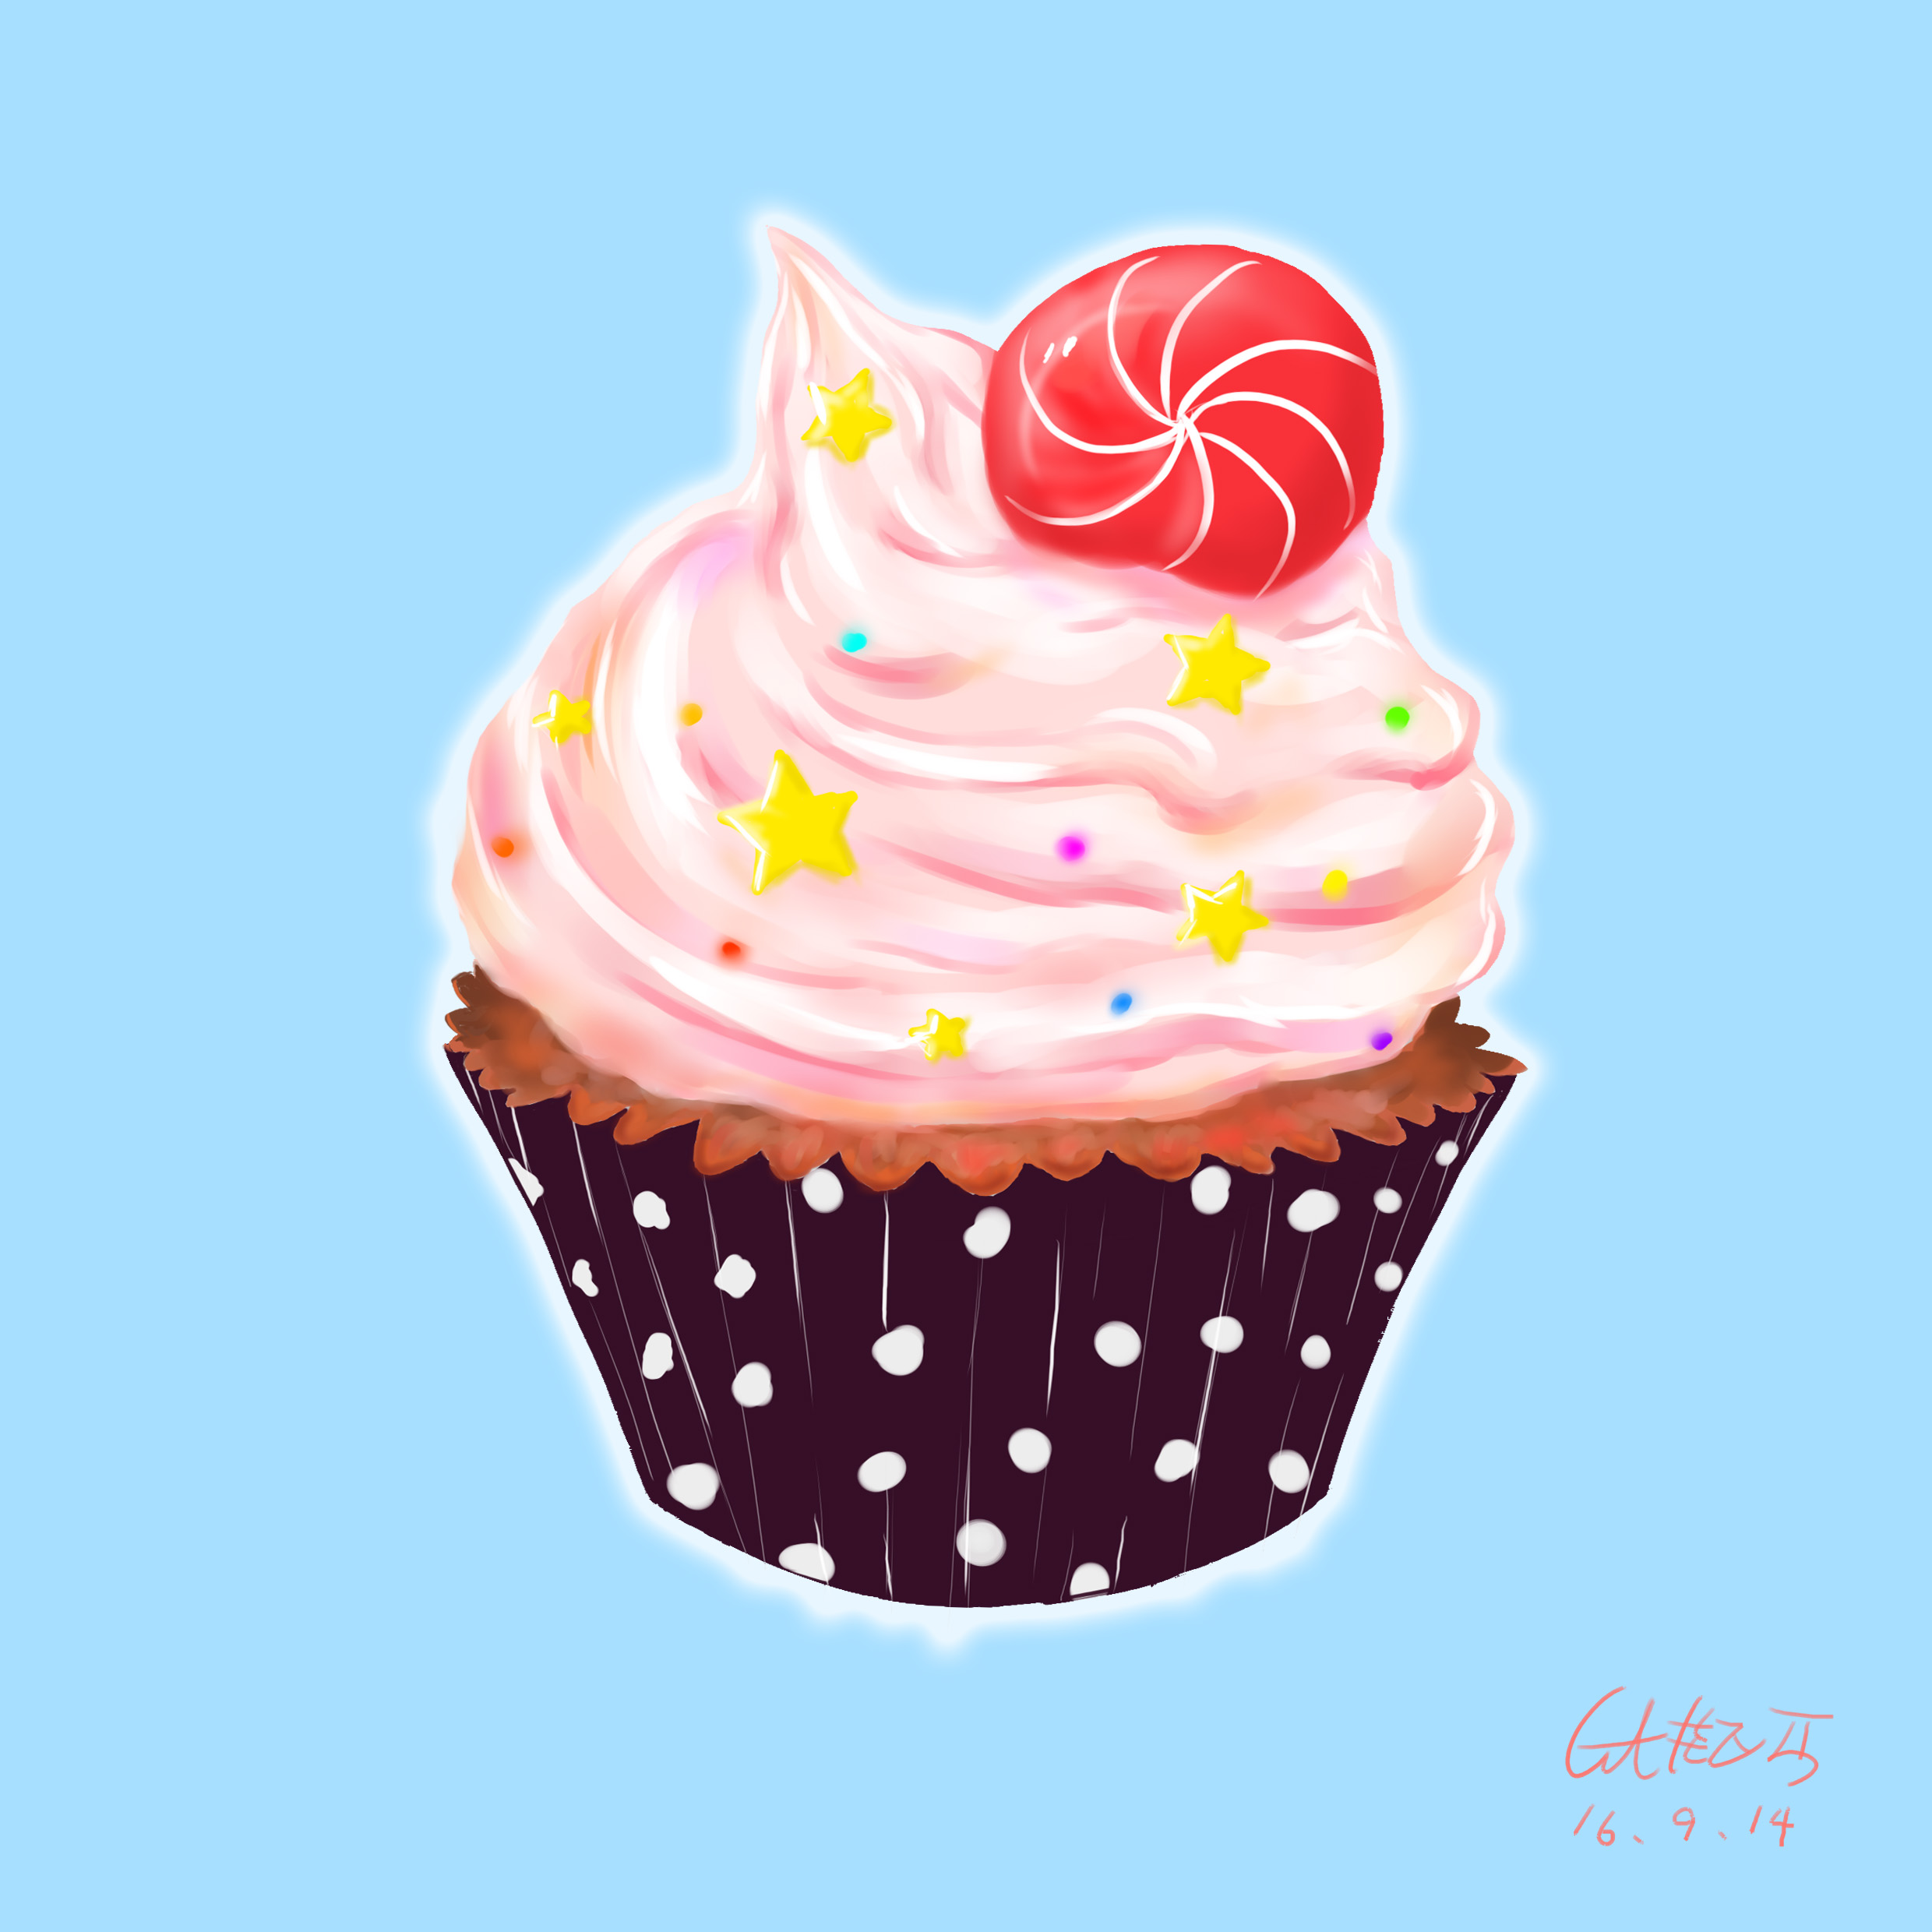 2016年9月14日cupcake.jpg